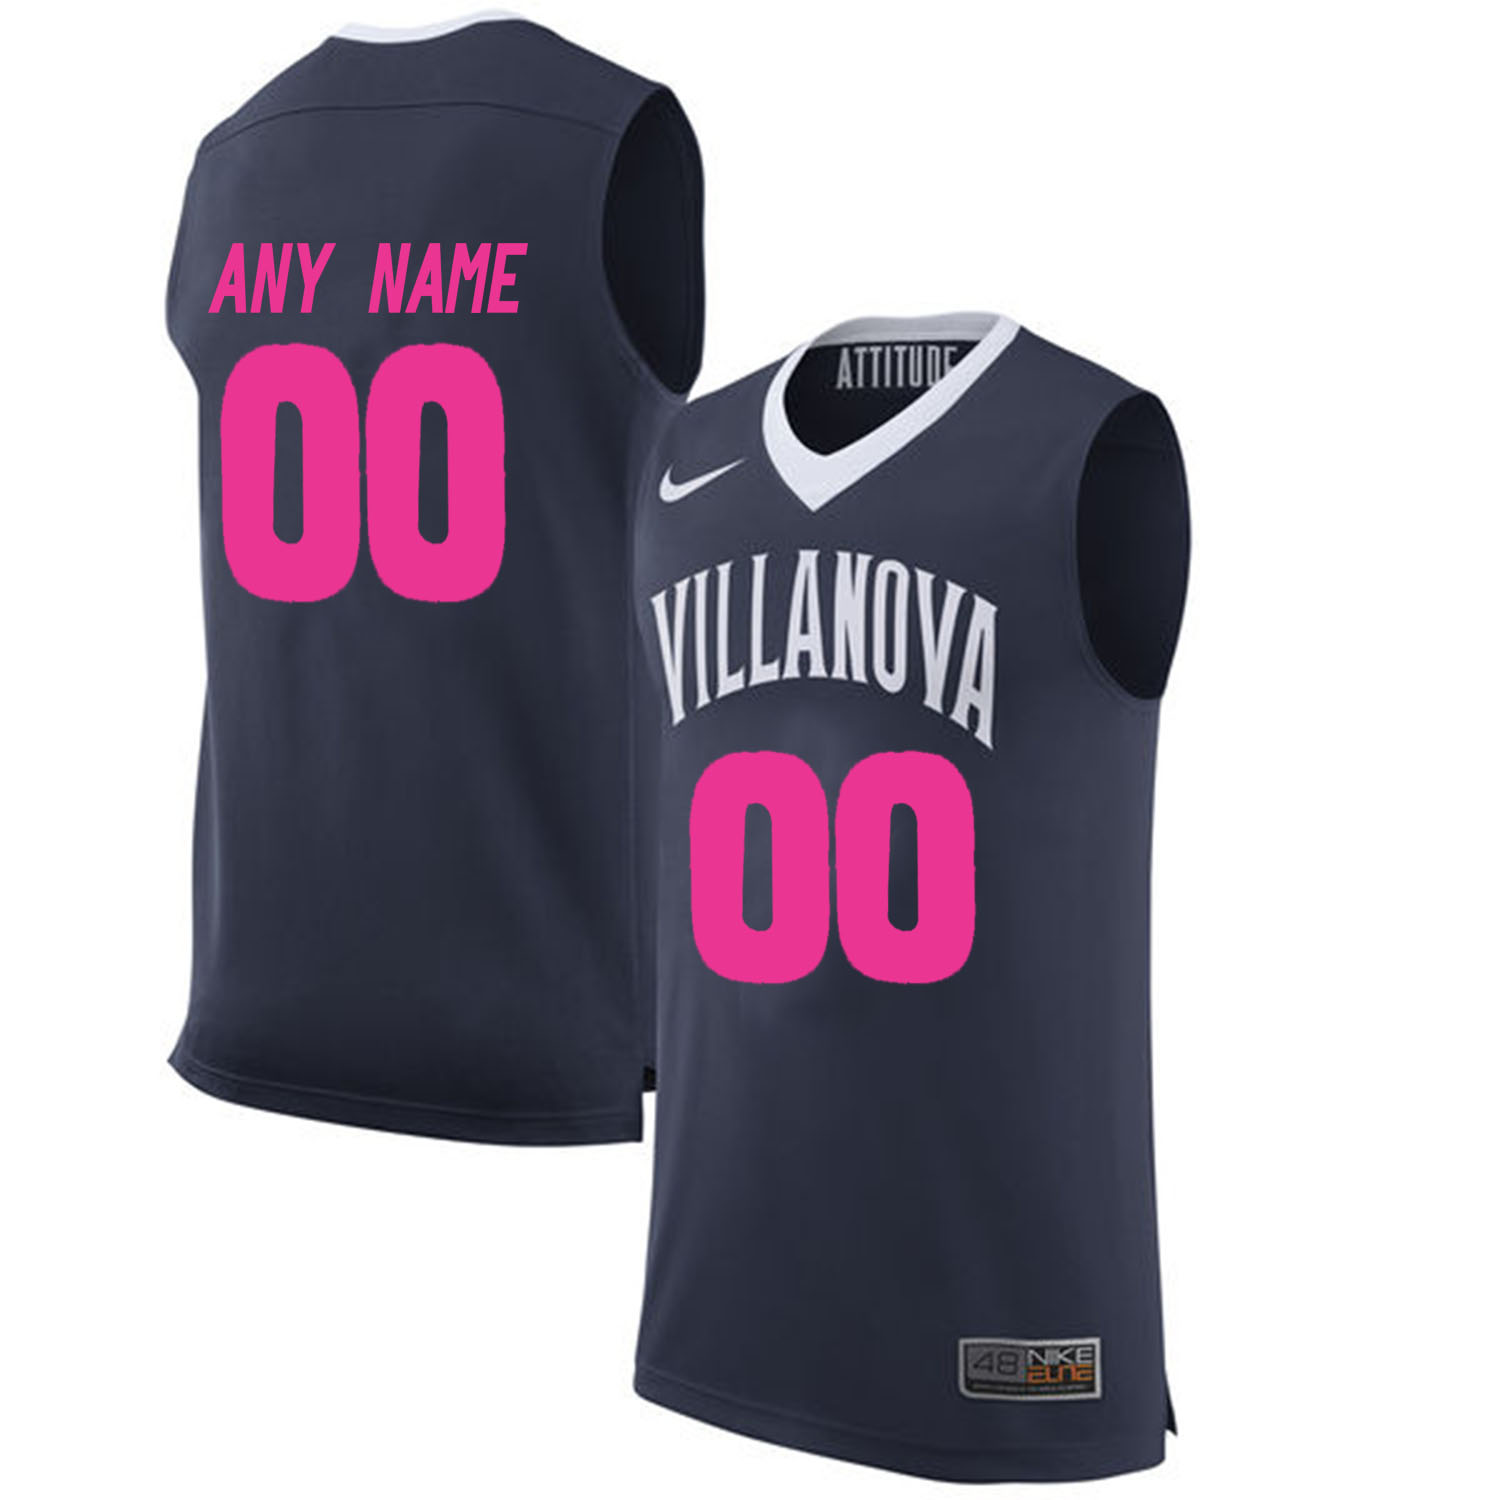 Villanova Wildcats Navy 2018 Breast Cancer Awareness Men's Customized College Basketball Jersey